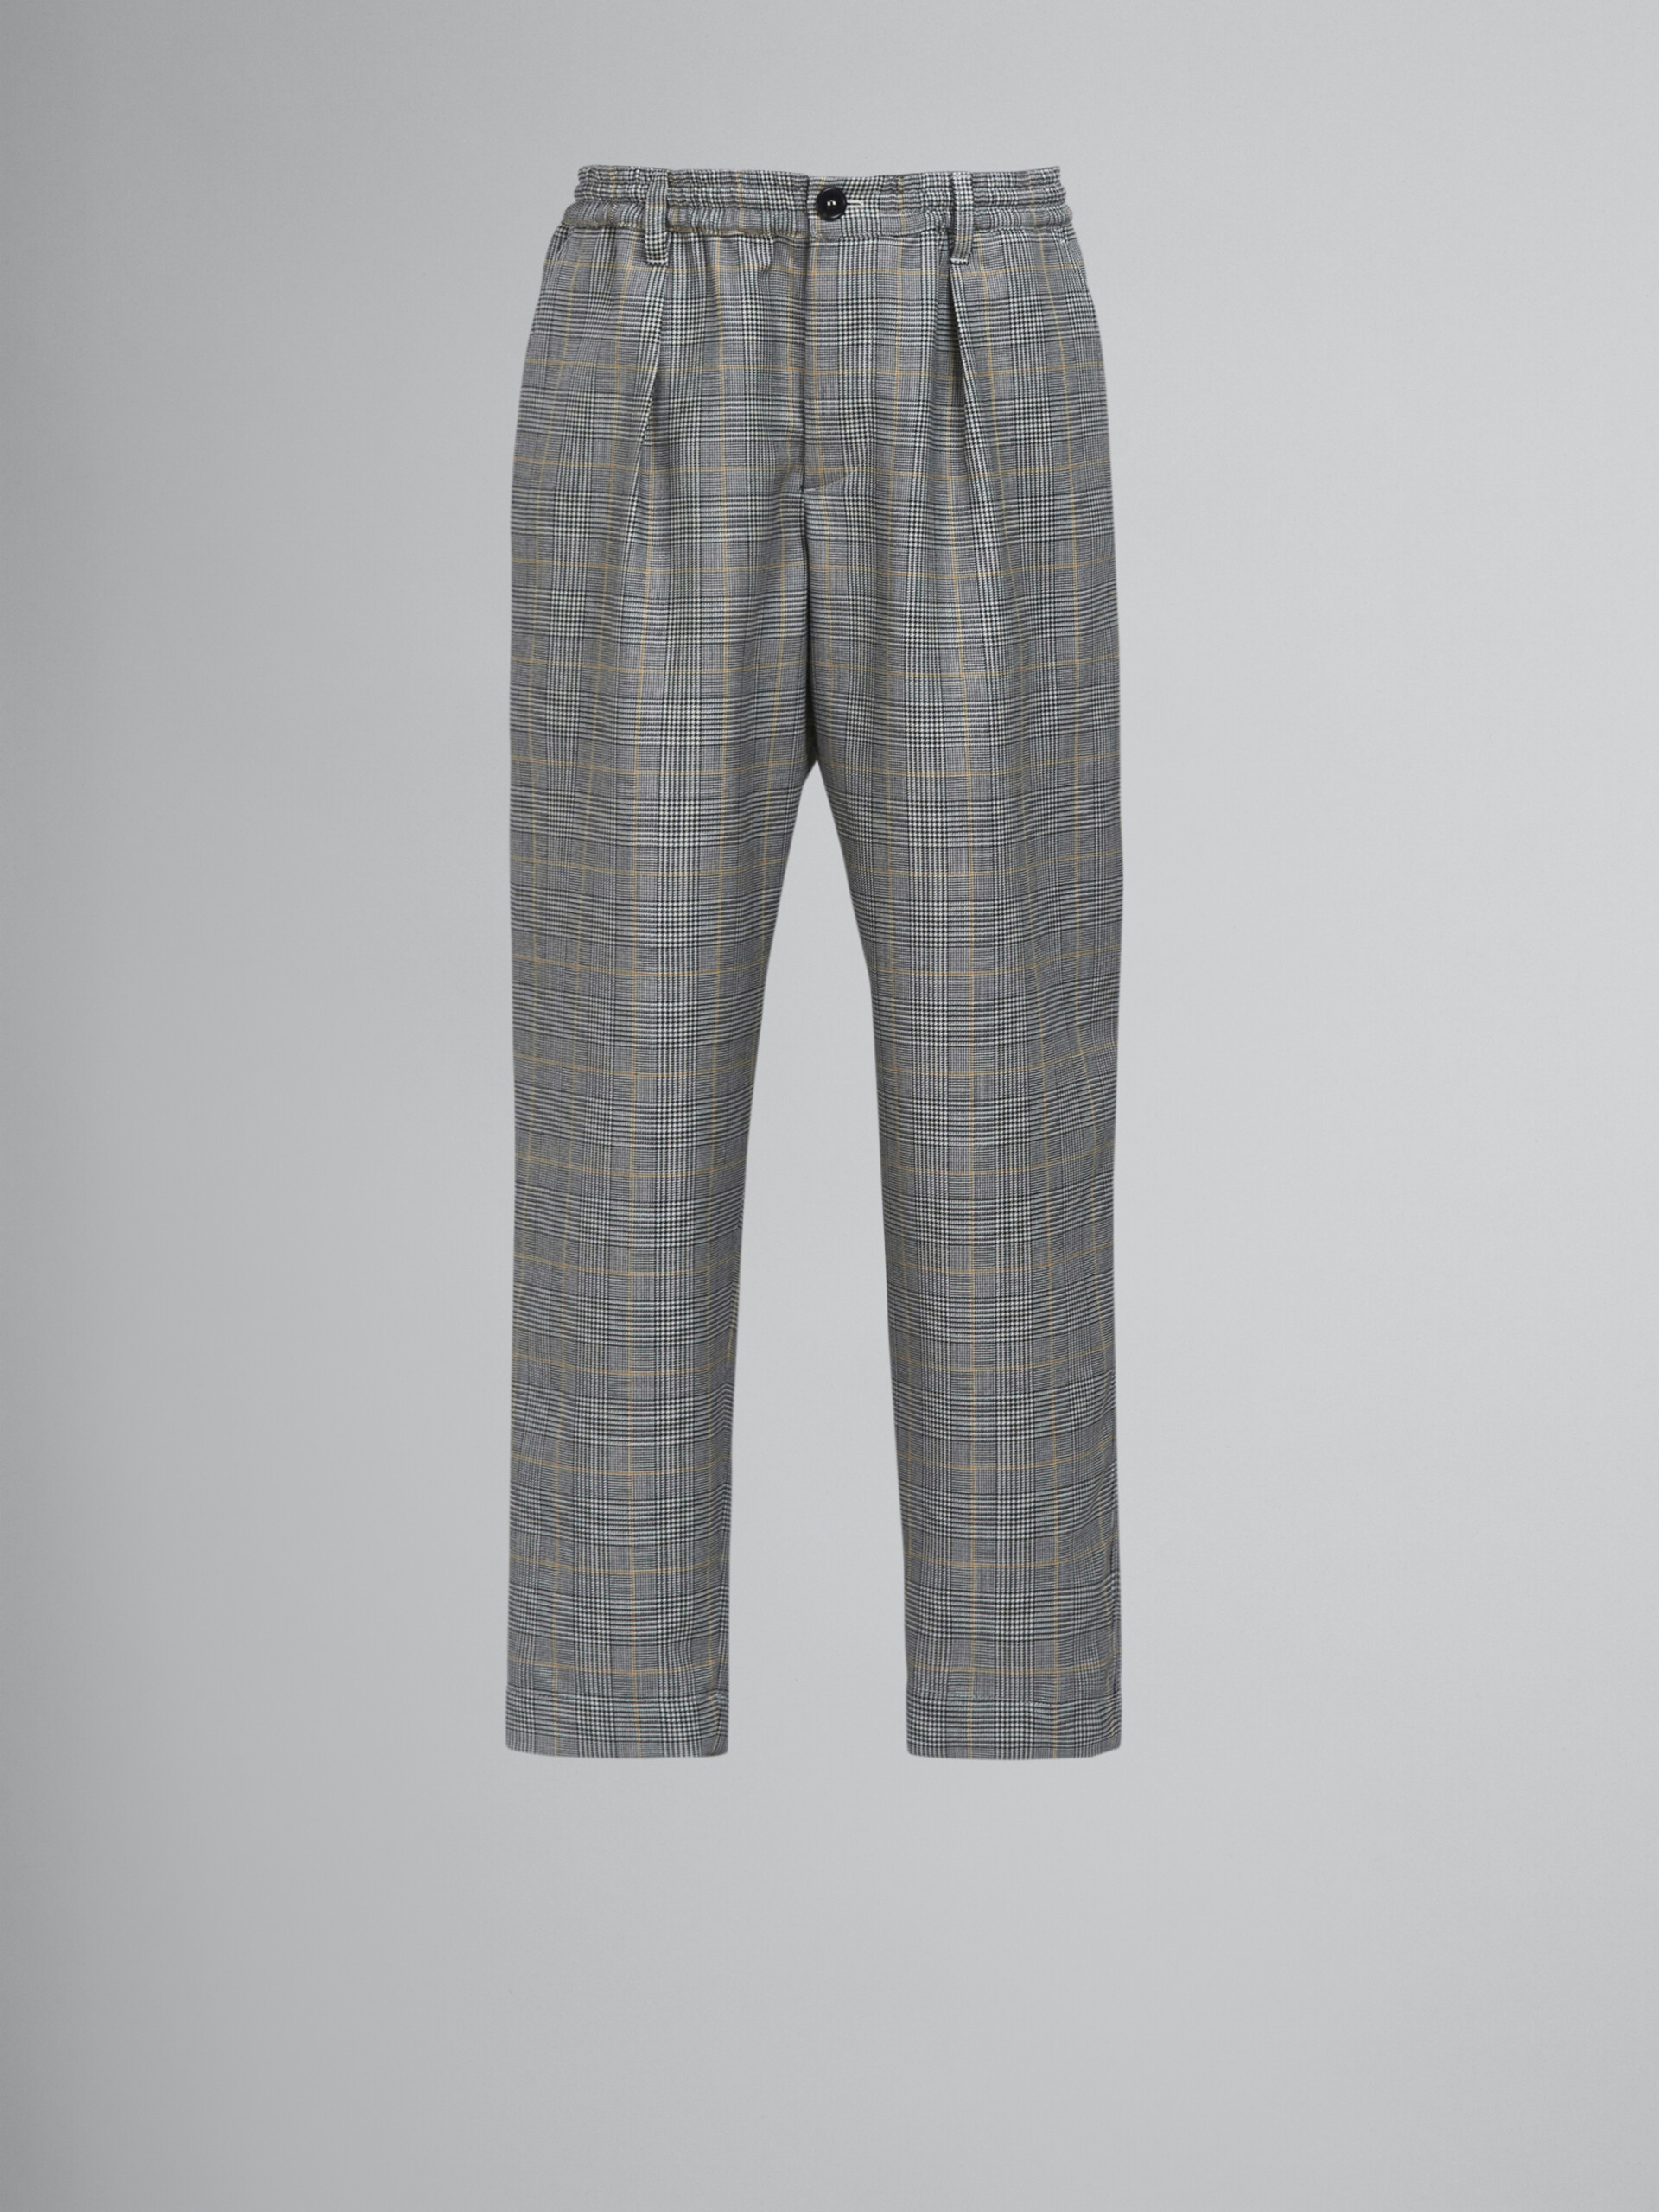 Prince of Wales wool pants - Pants - Image 1